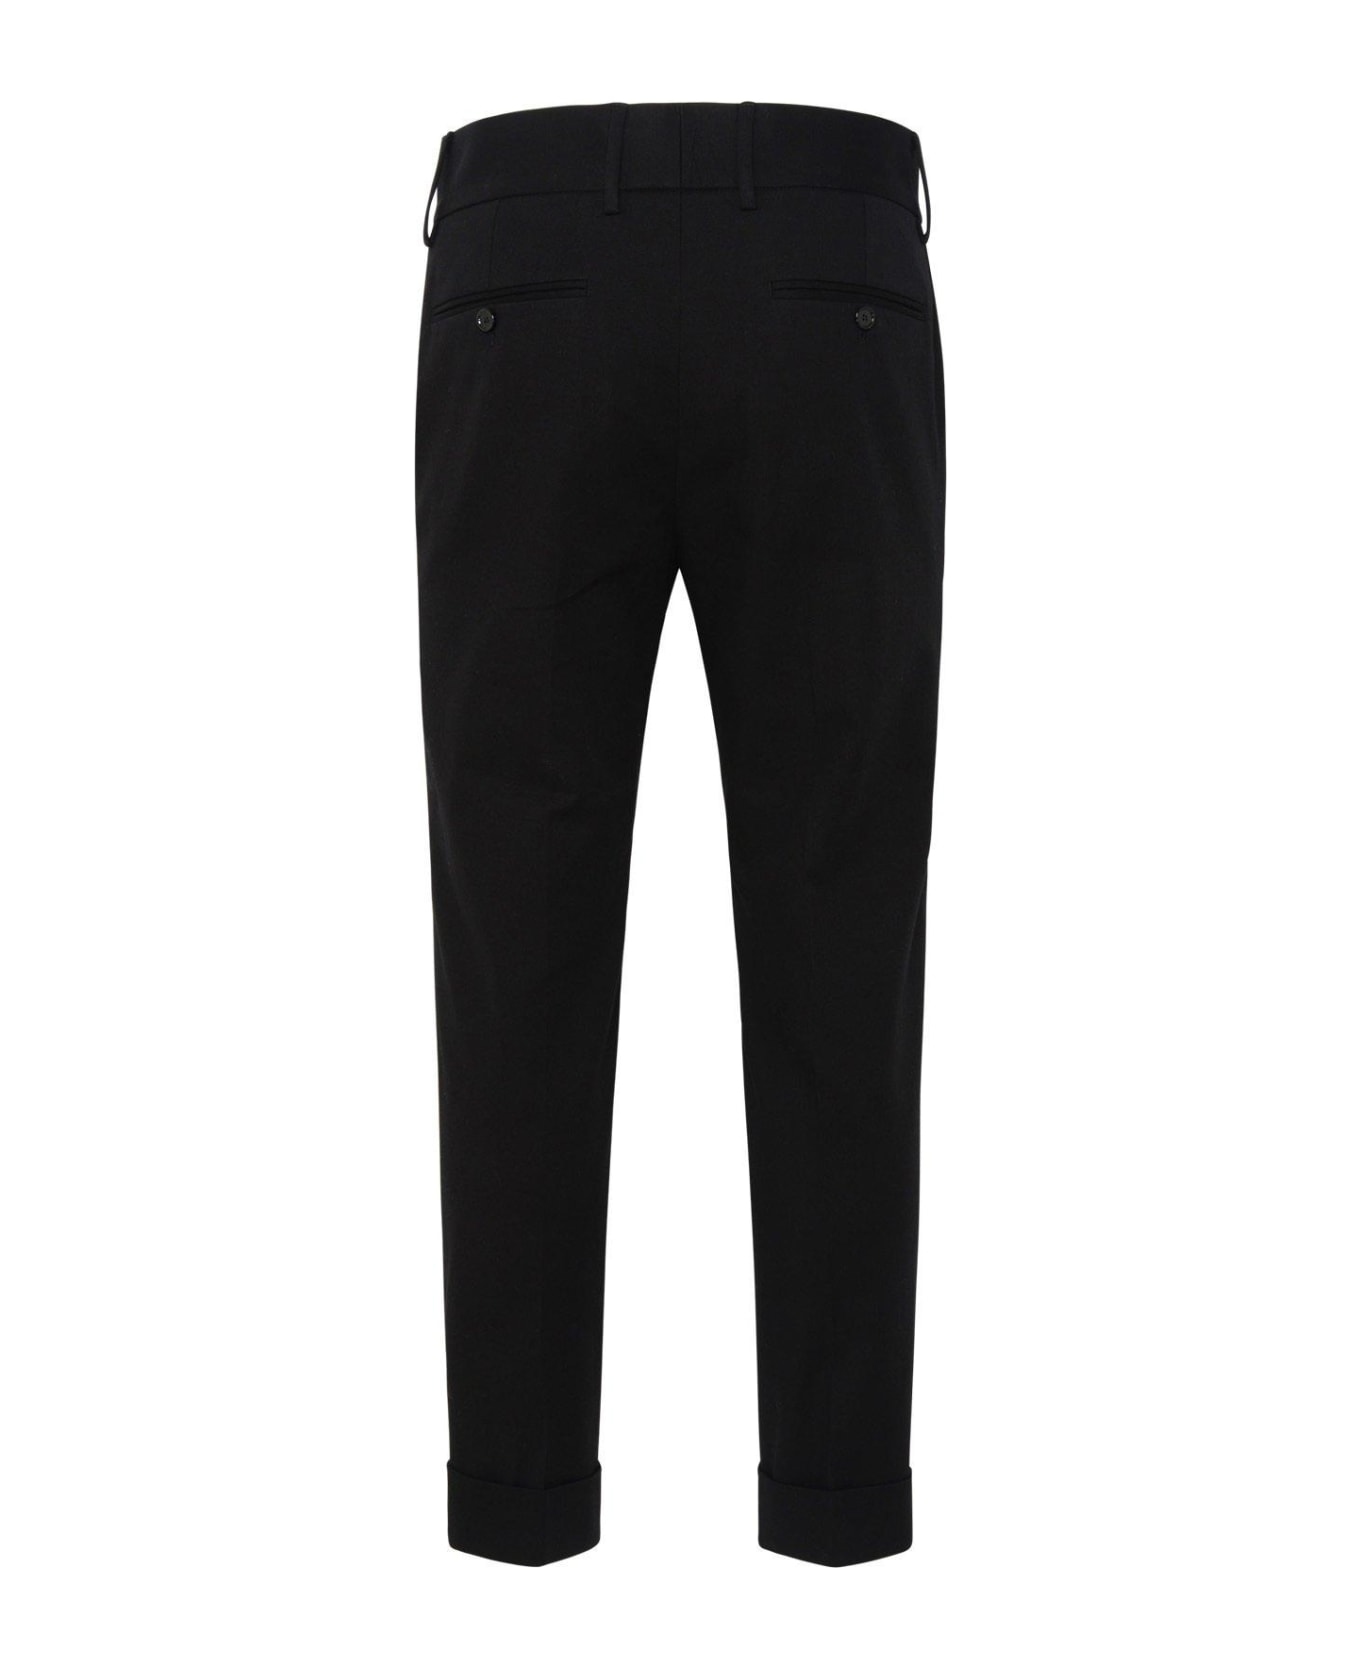 Dolce & Gabbana Stretch Drill Pants - Black ボトムス